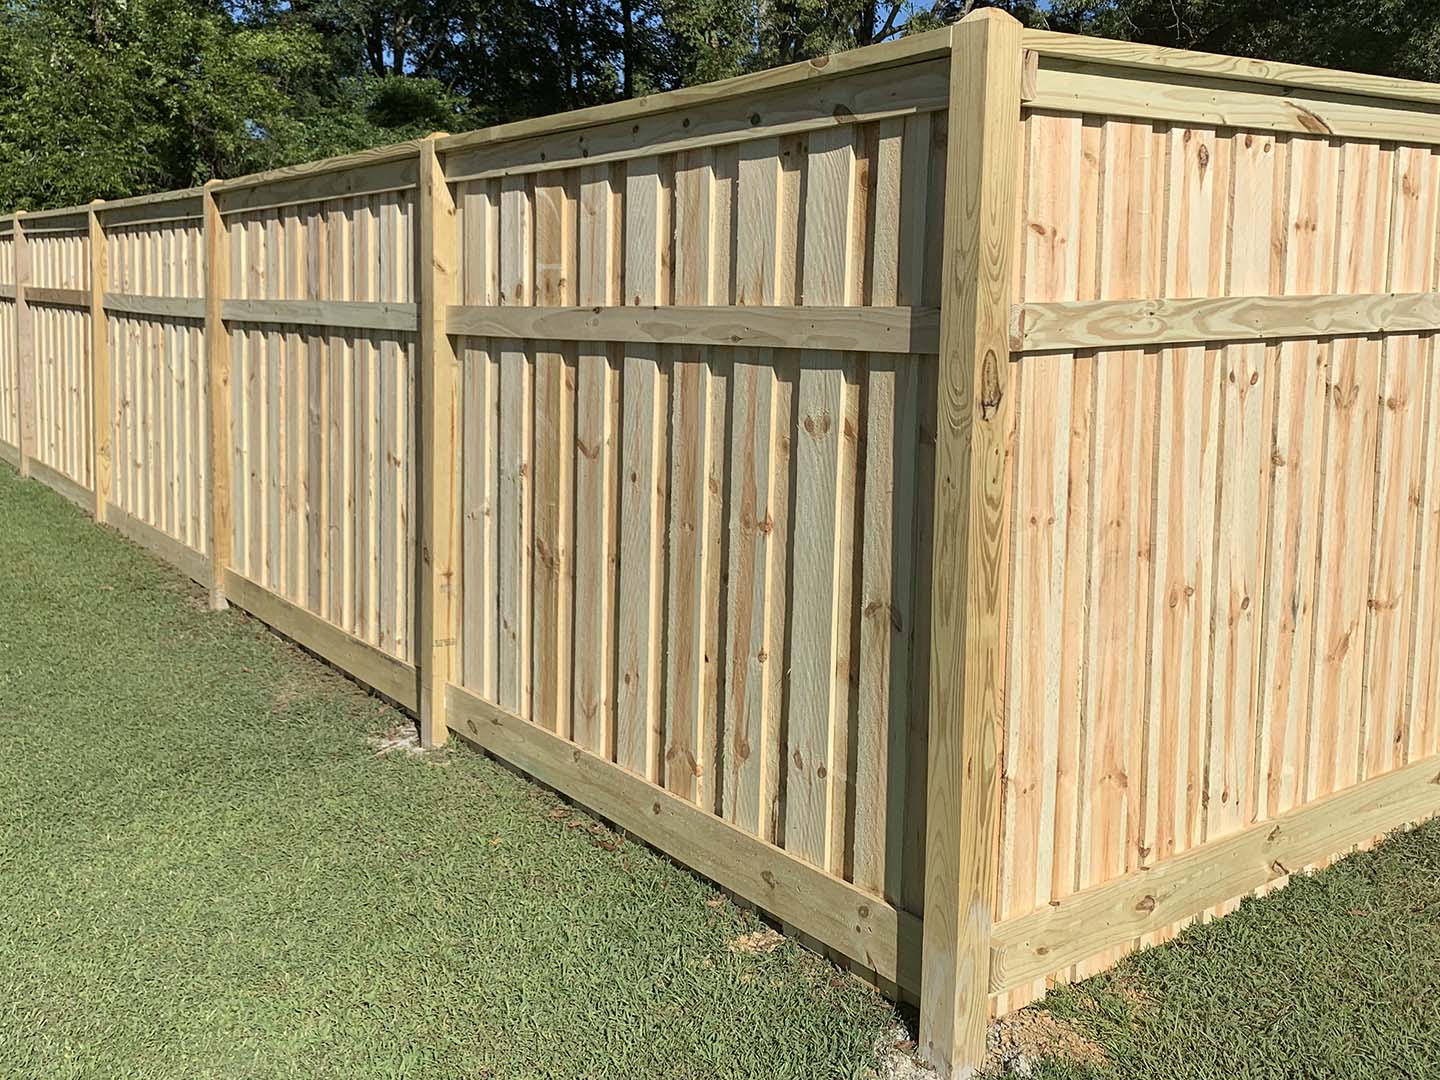 Wood fence Birmingham Alabama fence company